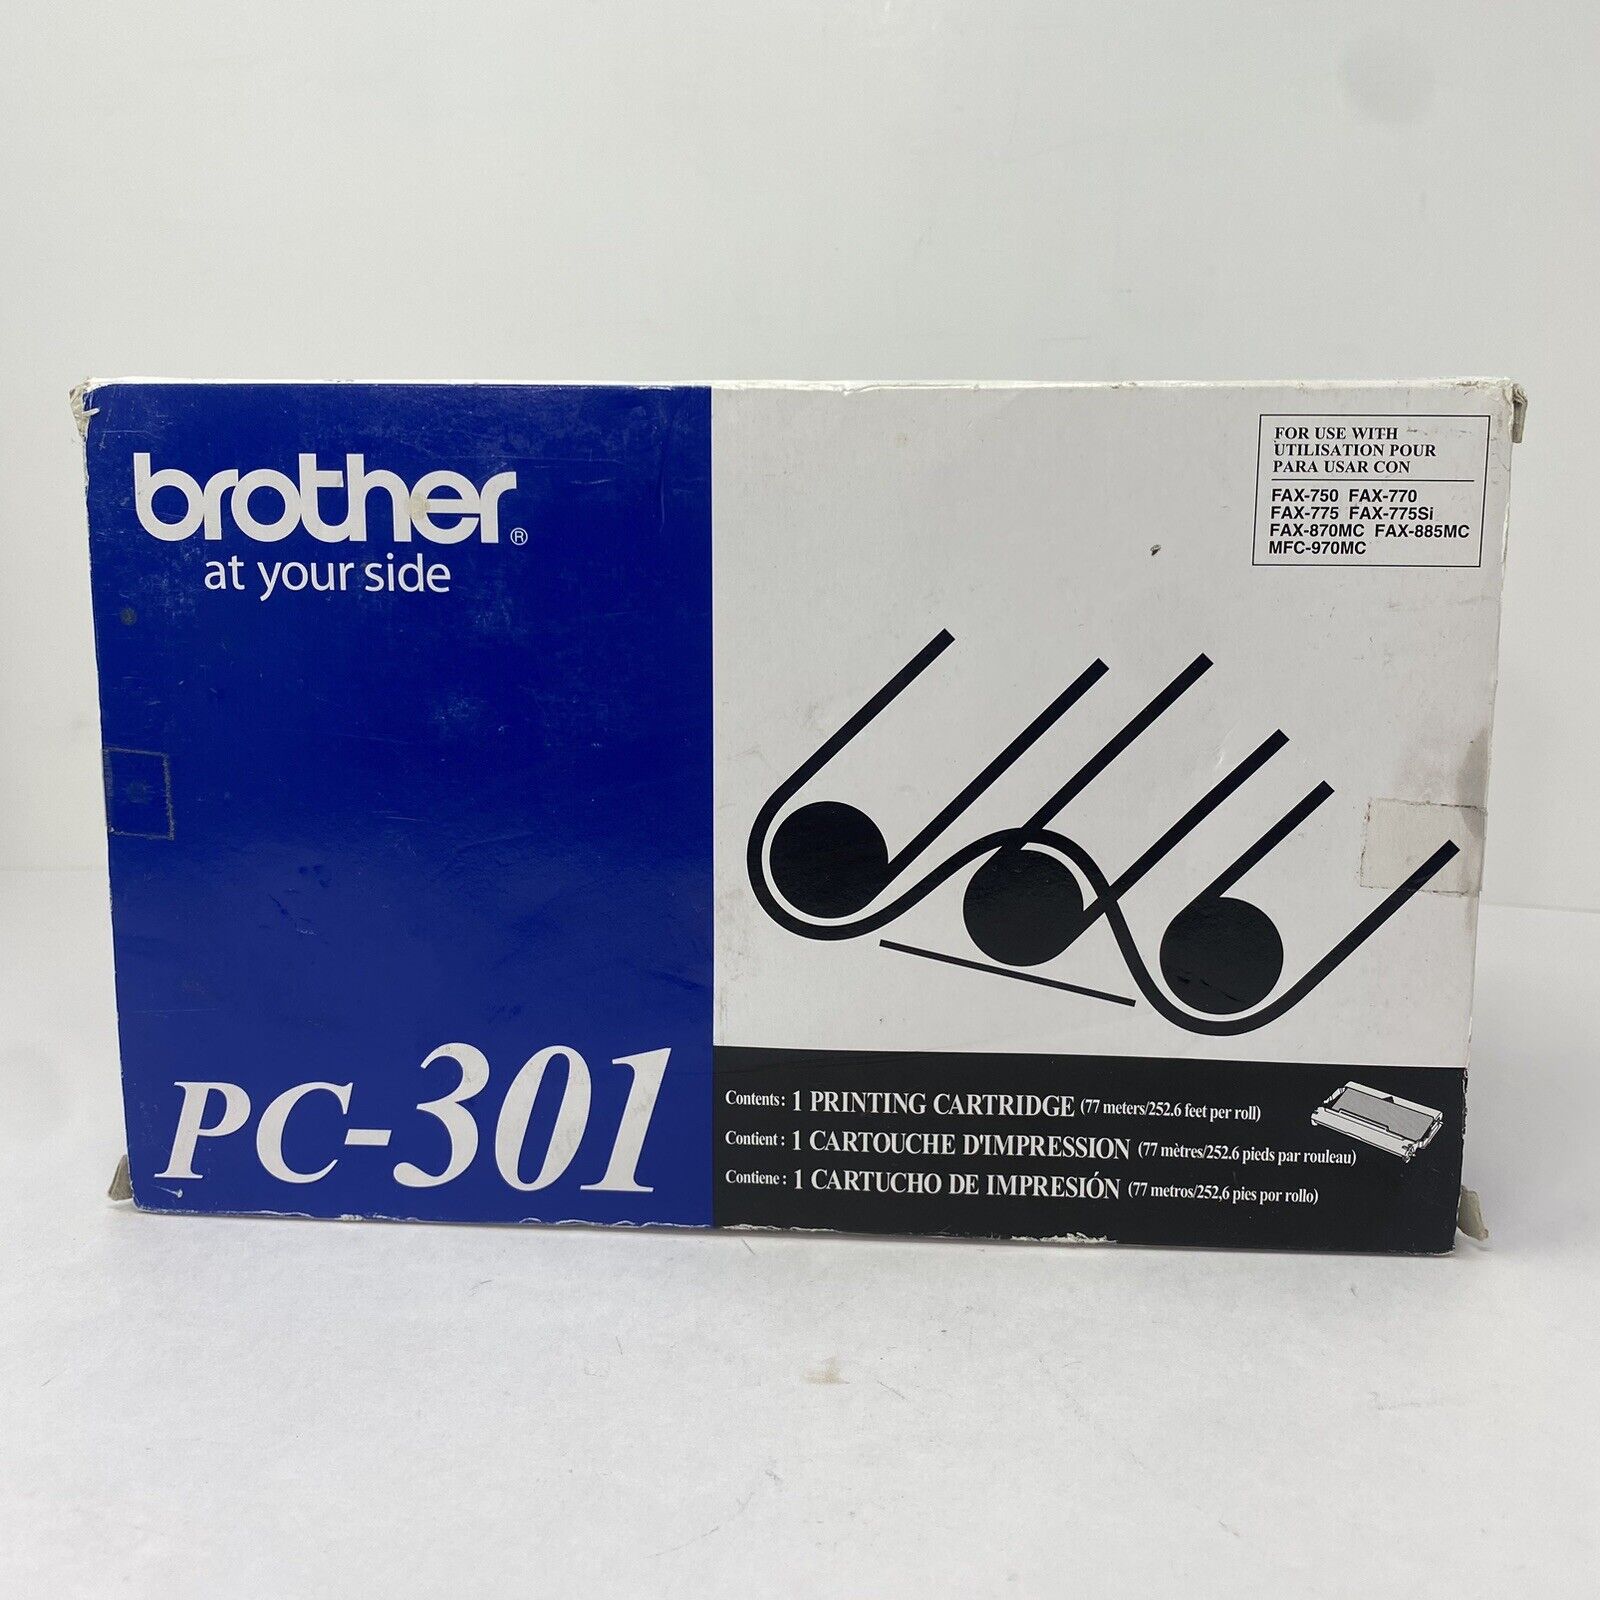 Brother PC-301 Fax/Printer Cartridge